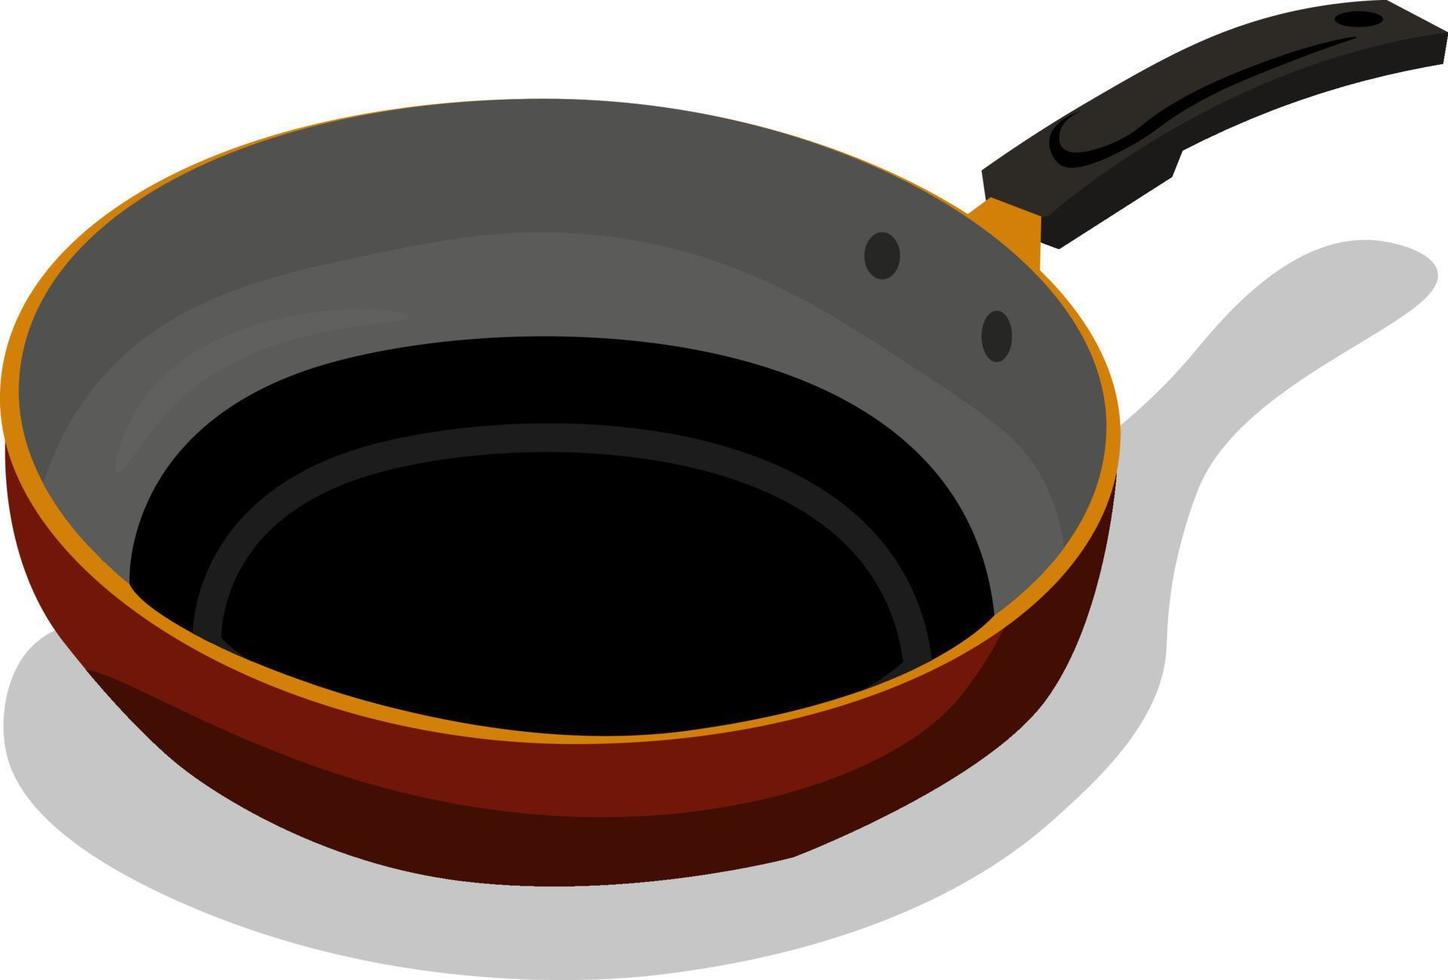 Frying pan, illustration, vector on white background